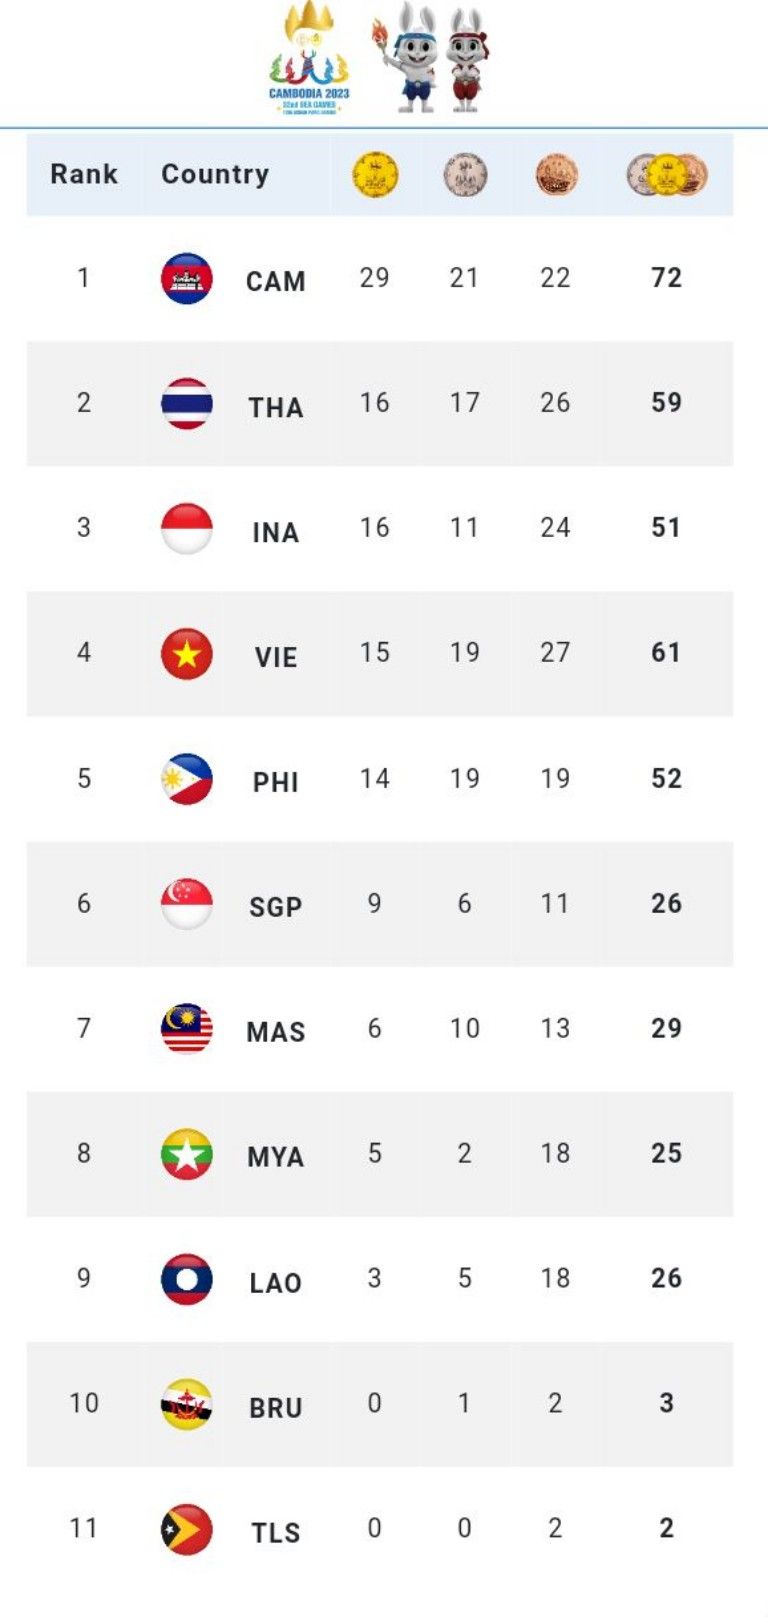 Kontingen Kamboja terus melesat dalam perolehan medali di SEA Games 2023. Hingga pukul 7.30 WIB, Senin (8/5/2023), jumlah total yang diraihnya sebanyak 74 medali.